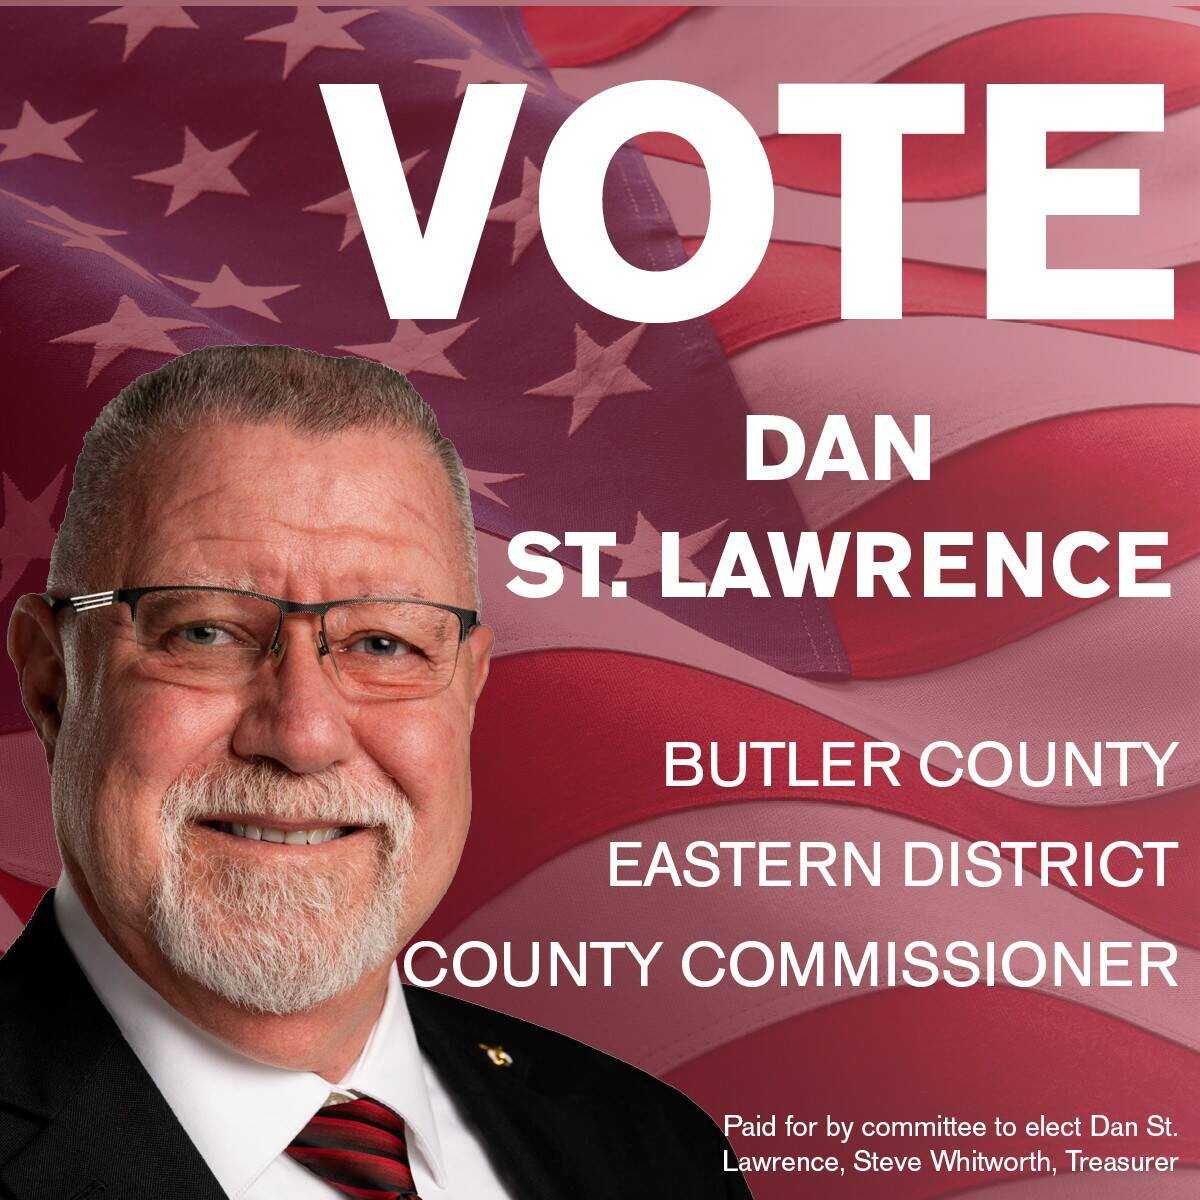 Vote for Dan St. Lawrence